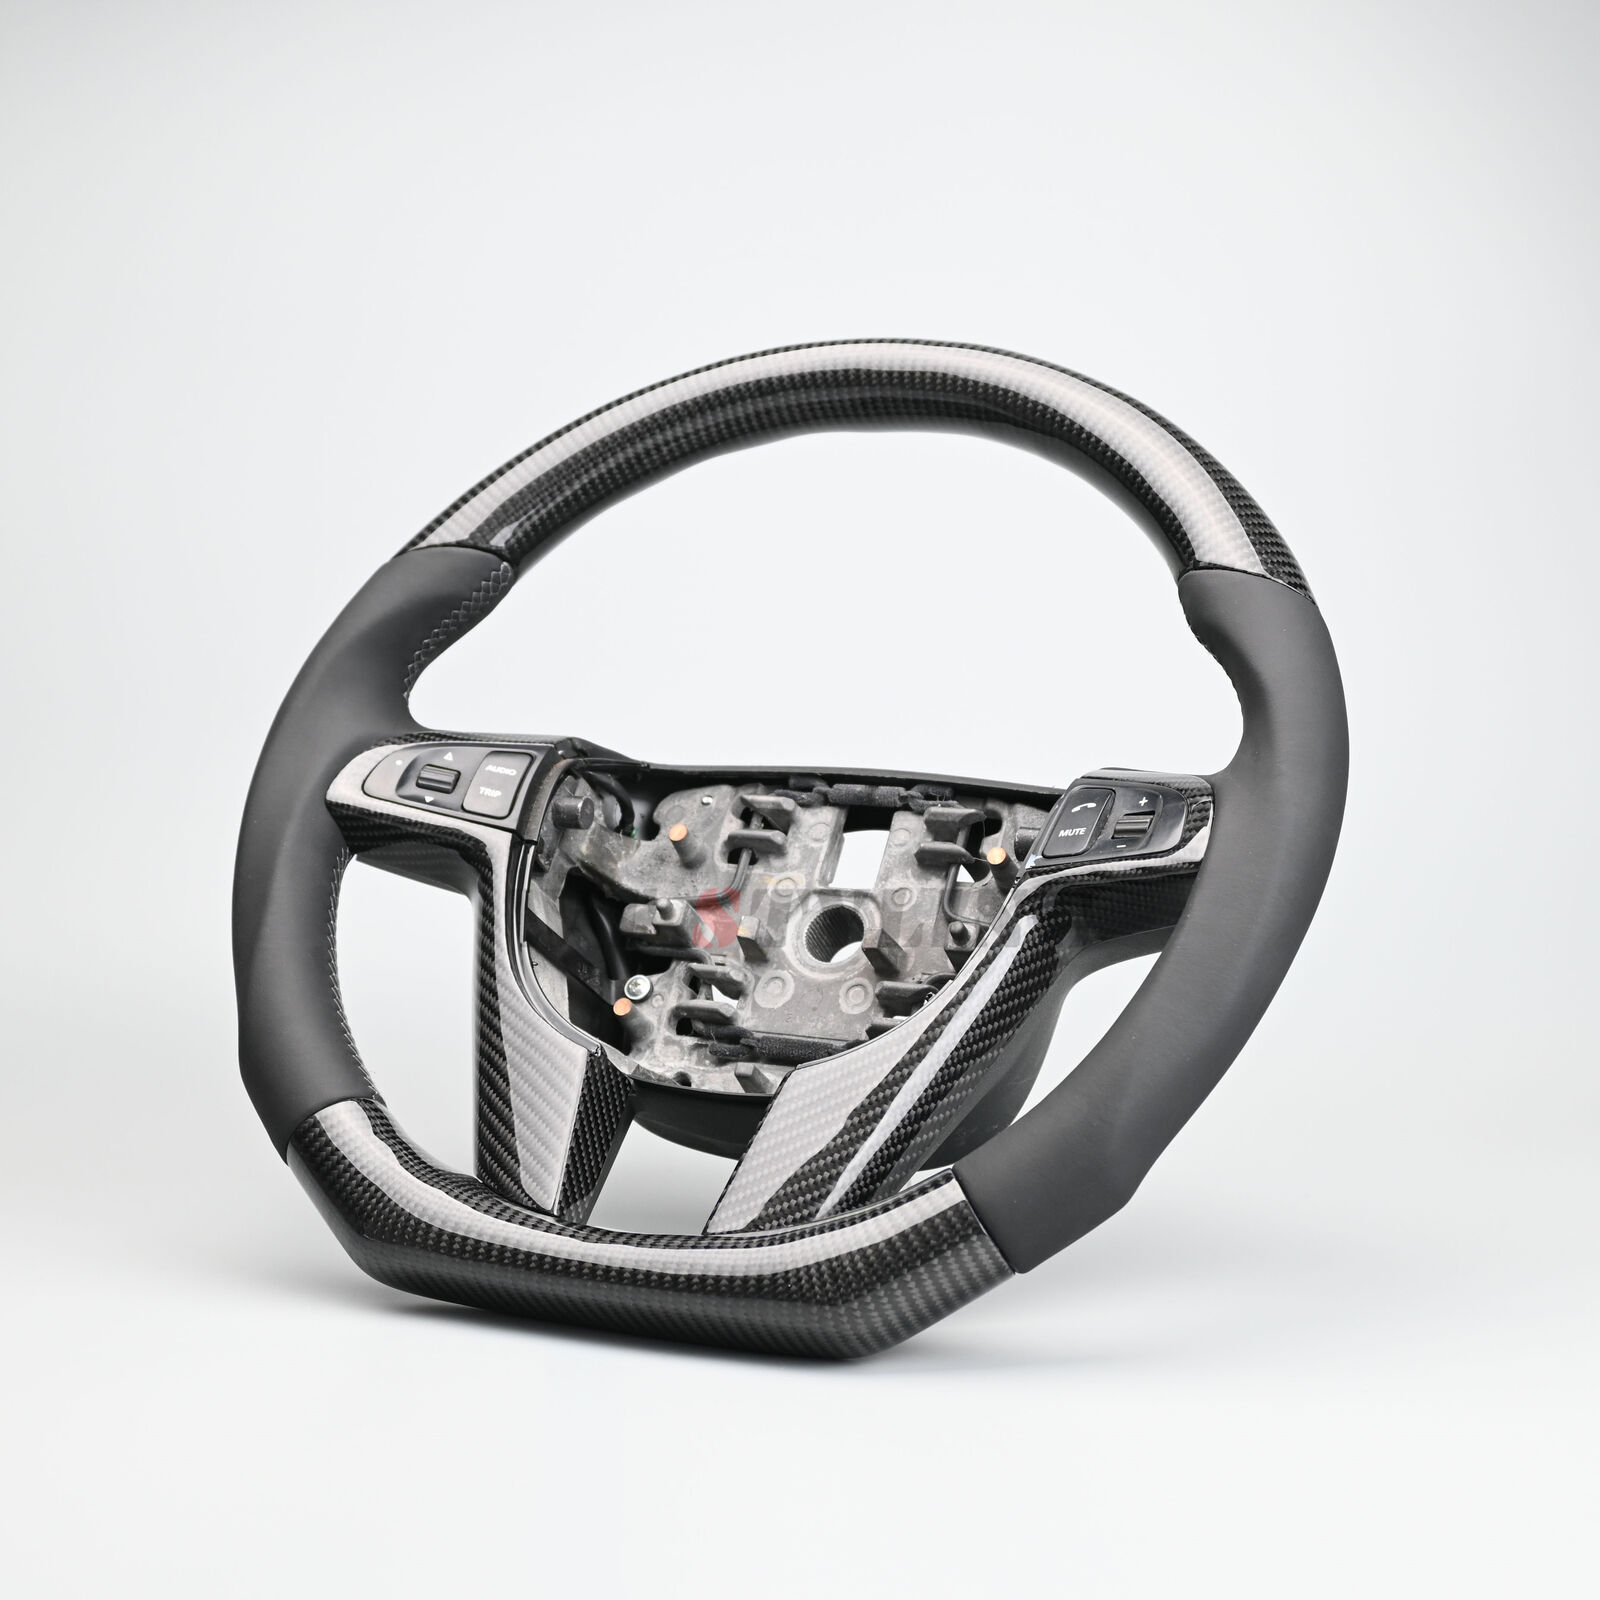 Carbon Fibre Steering Wheel Suitable For Holden HSV commodore VE Pontiac G8 GXP